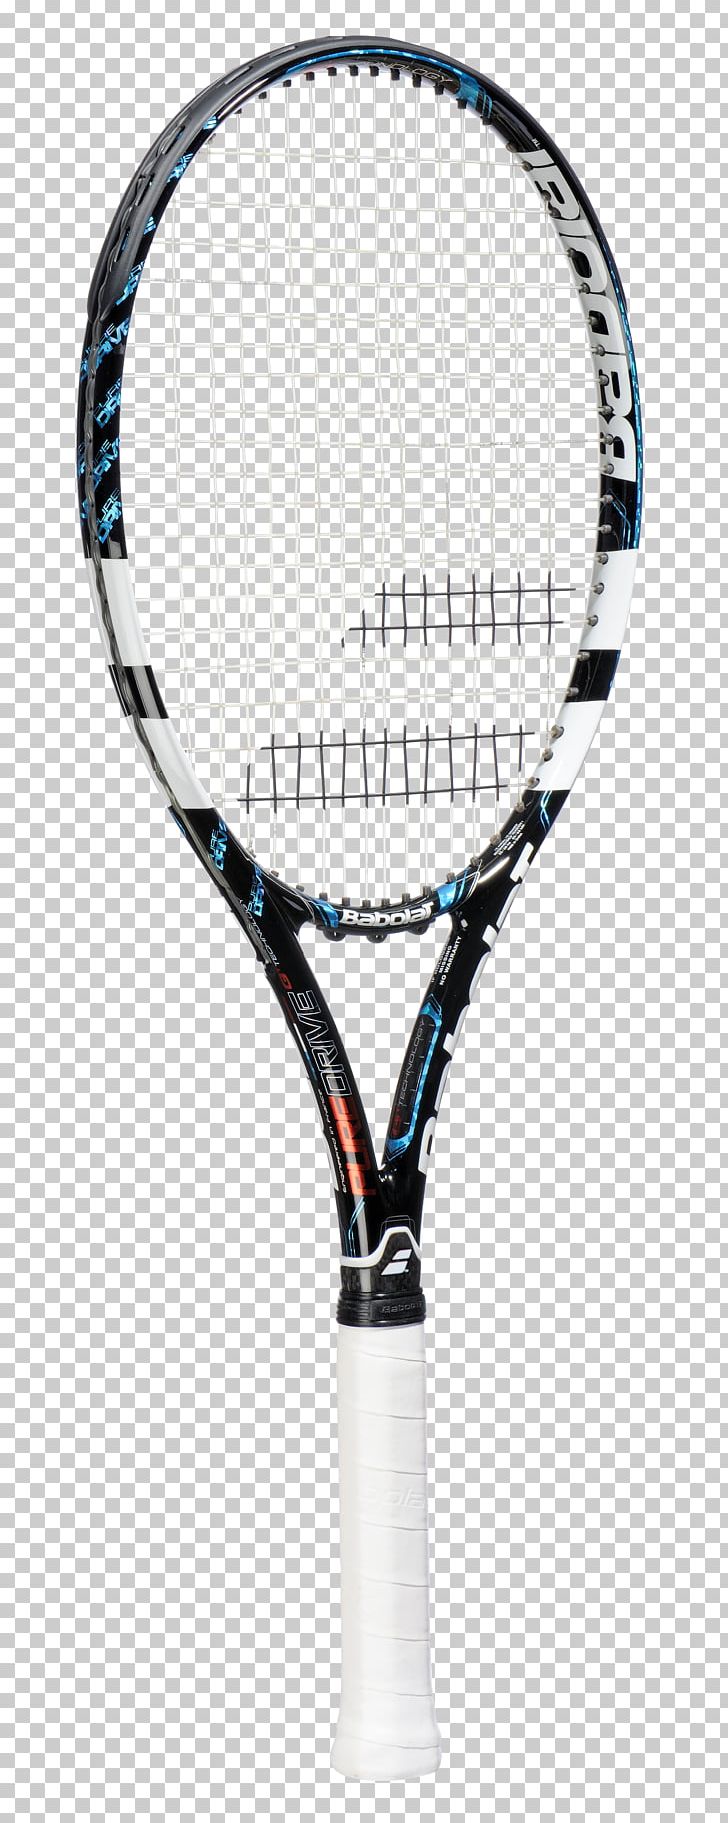 2014 French Open Babolat Racket Rakieta Tenisowa Tennis PNG, Clipart, Andy Roddick, Babolat, Babolat Pure Drive, Drive, French Open Free PNG Download